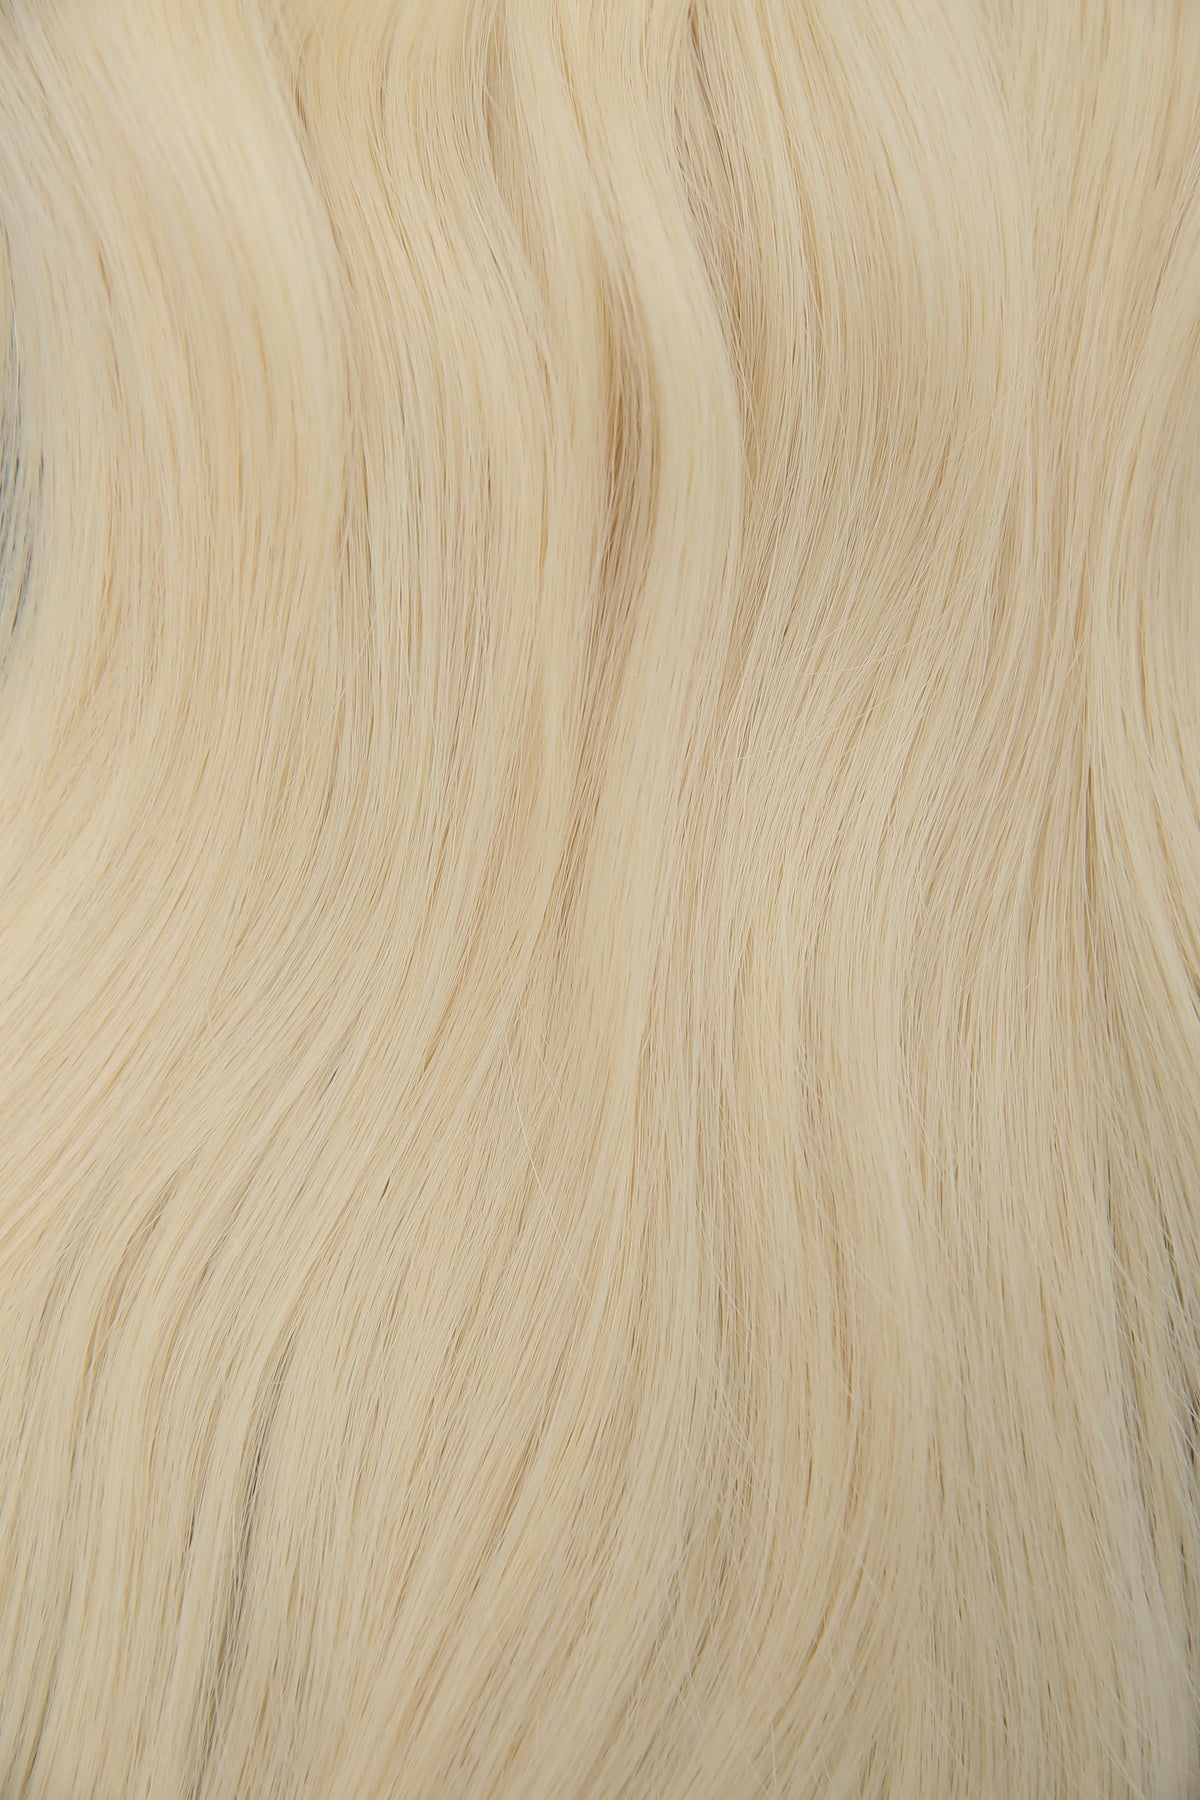 #613 Platinum Blonde Nano Tip Hair Extensions